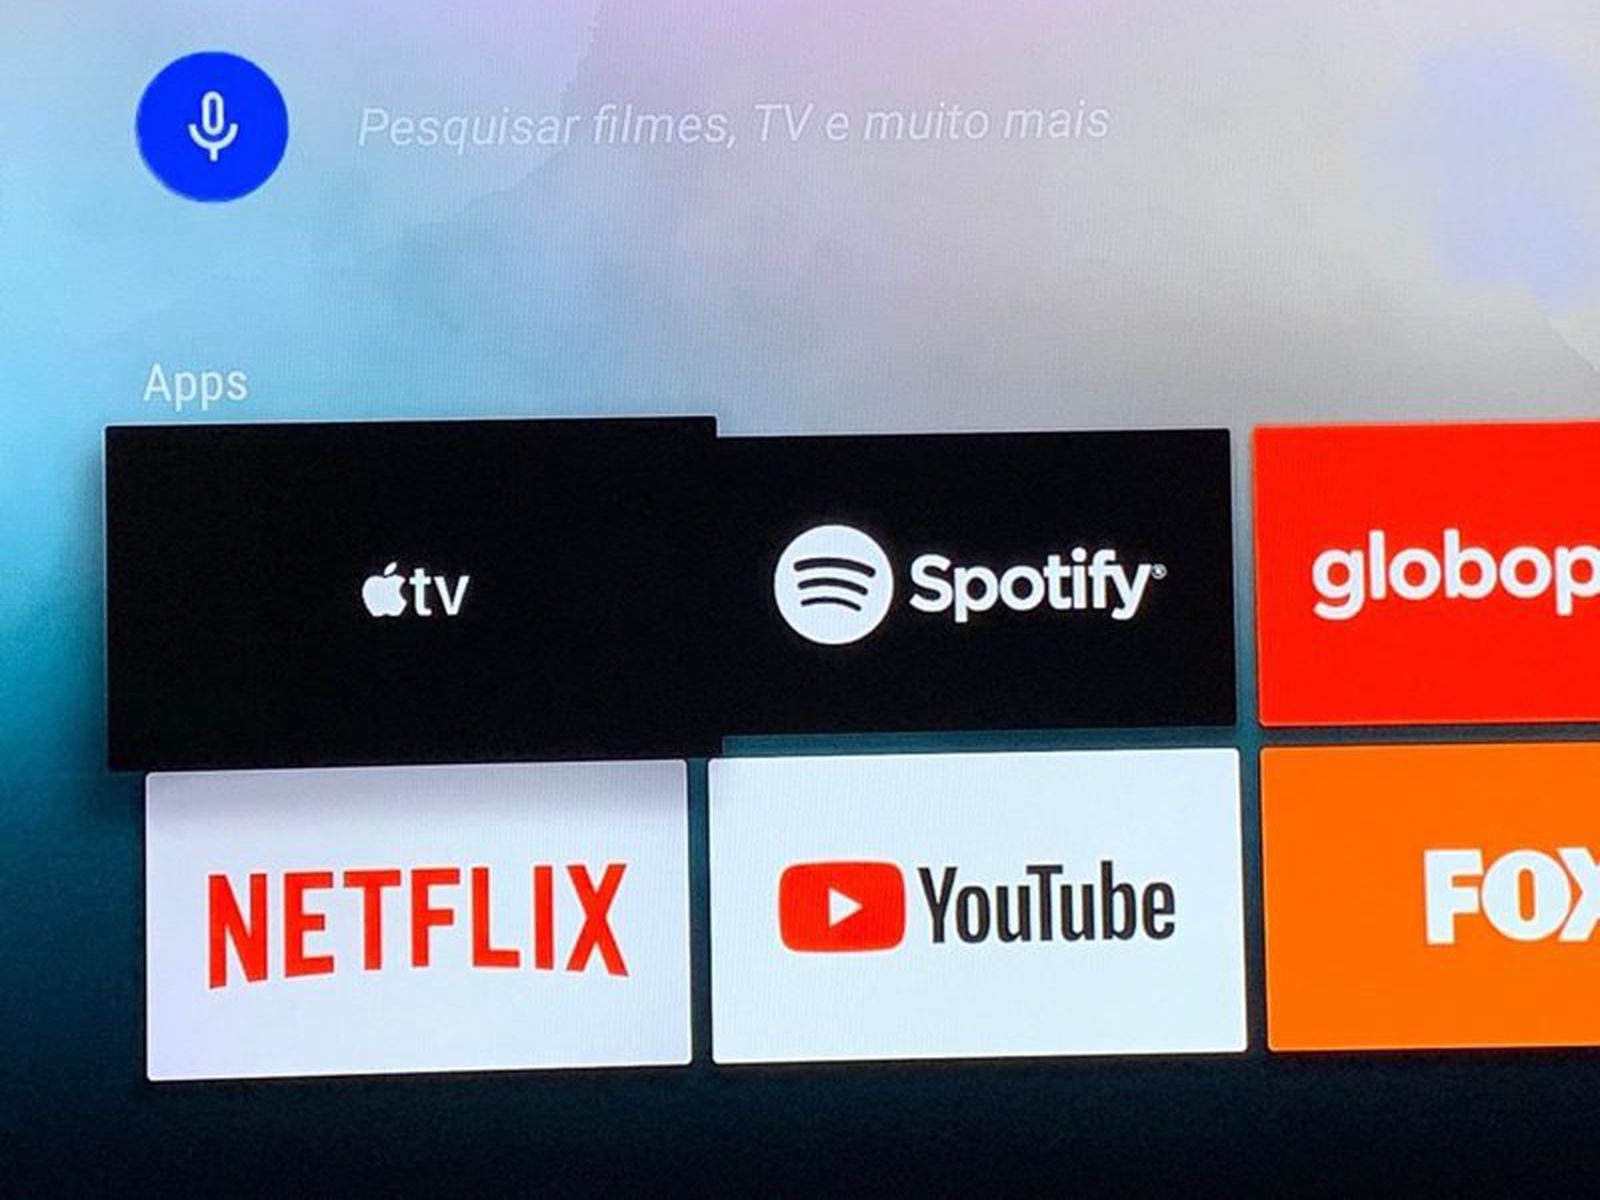 LG's WebOS TVs Finally Get A Native Apple Music App